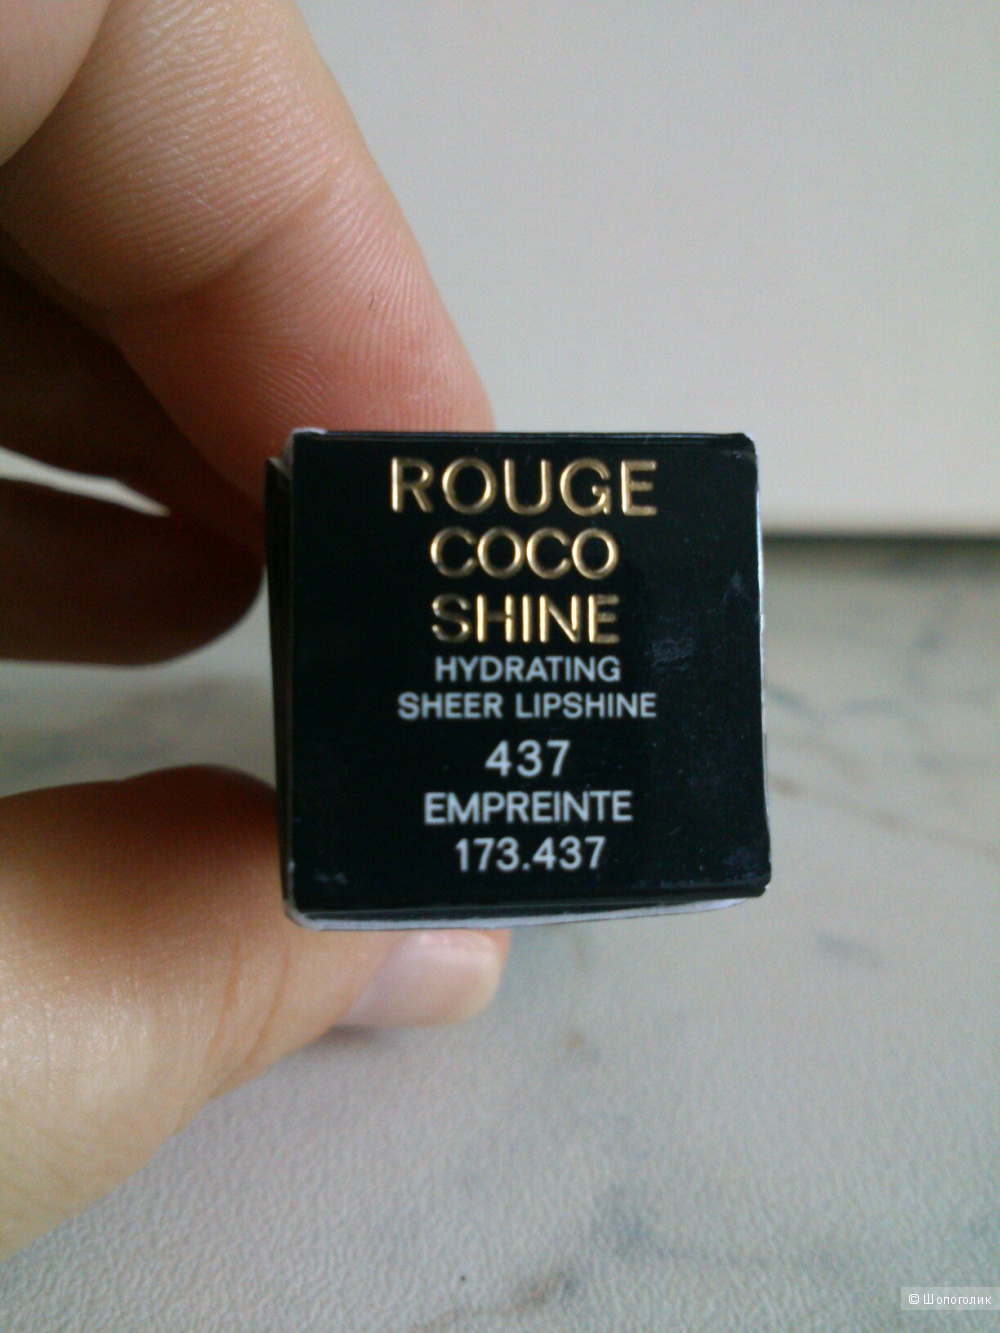 CHANEL Rouge Coco Shine Hydrating Sheer Lipshine №437 Empreinte.